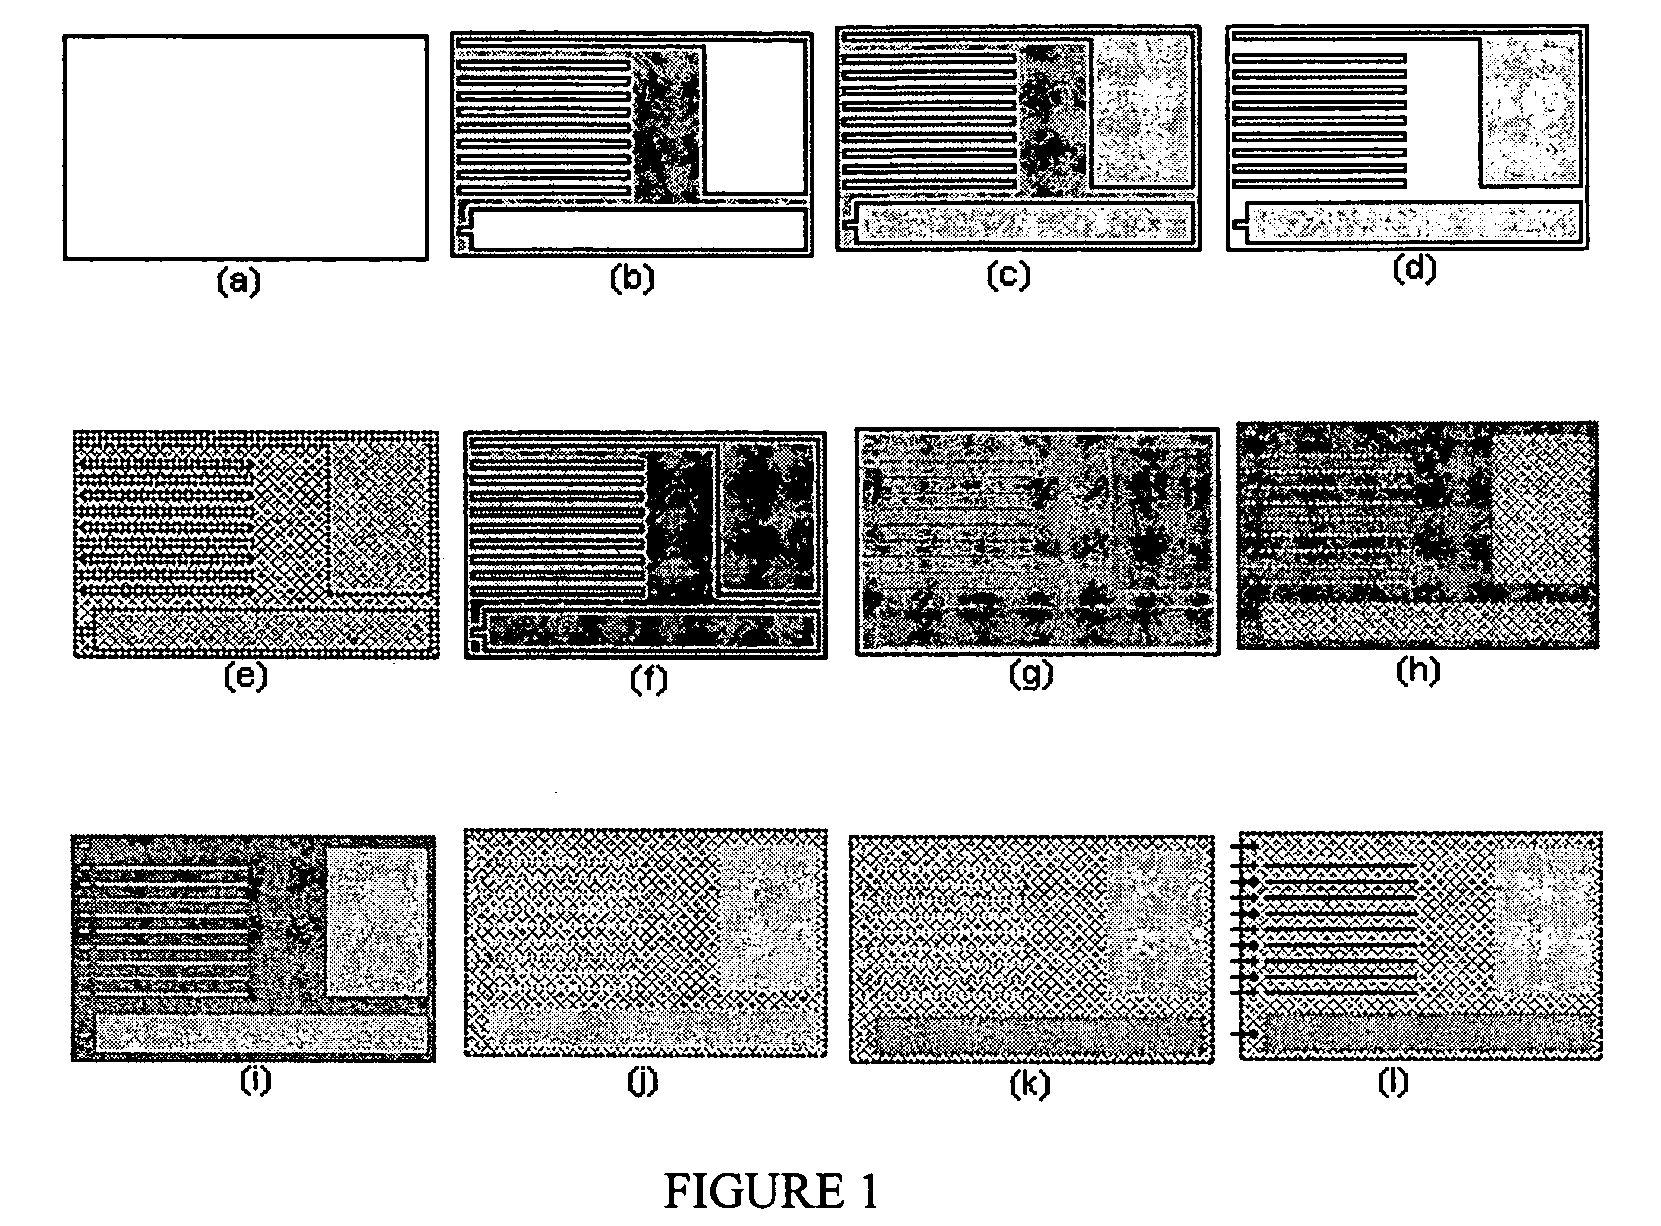 Matrix array nanobiosensor